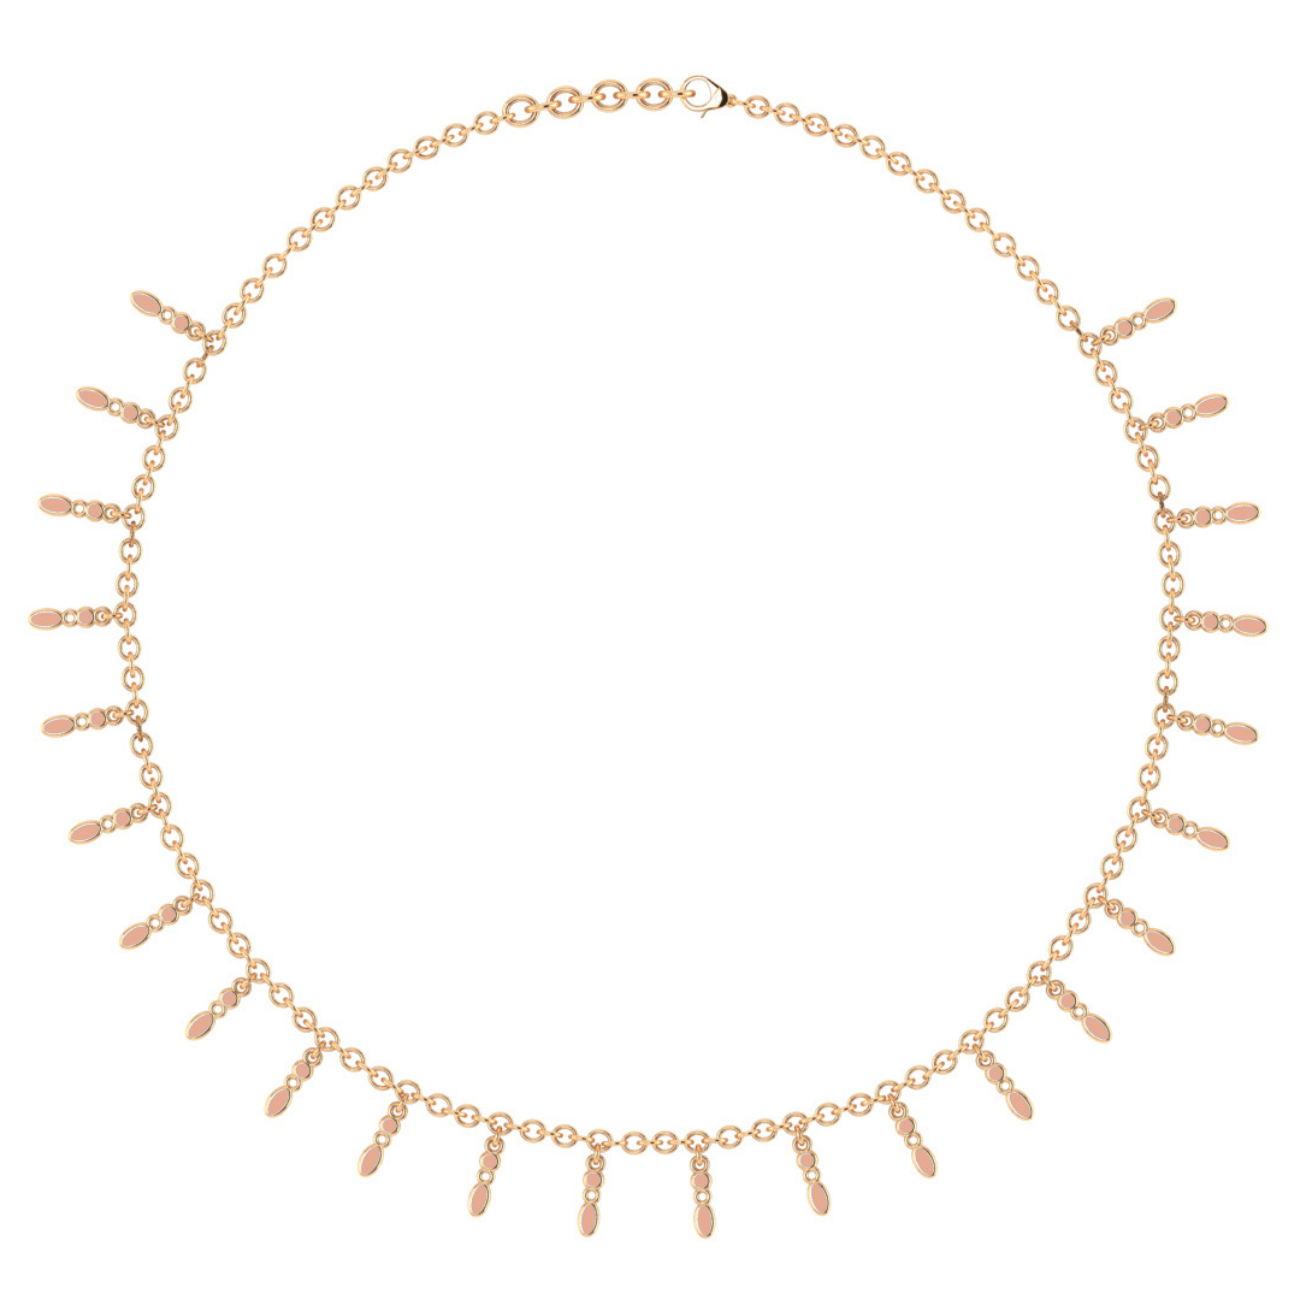 Amalei 18k gold necklace